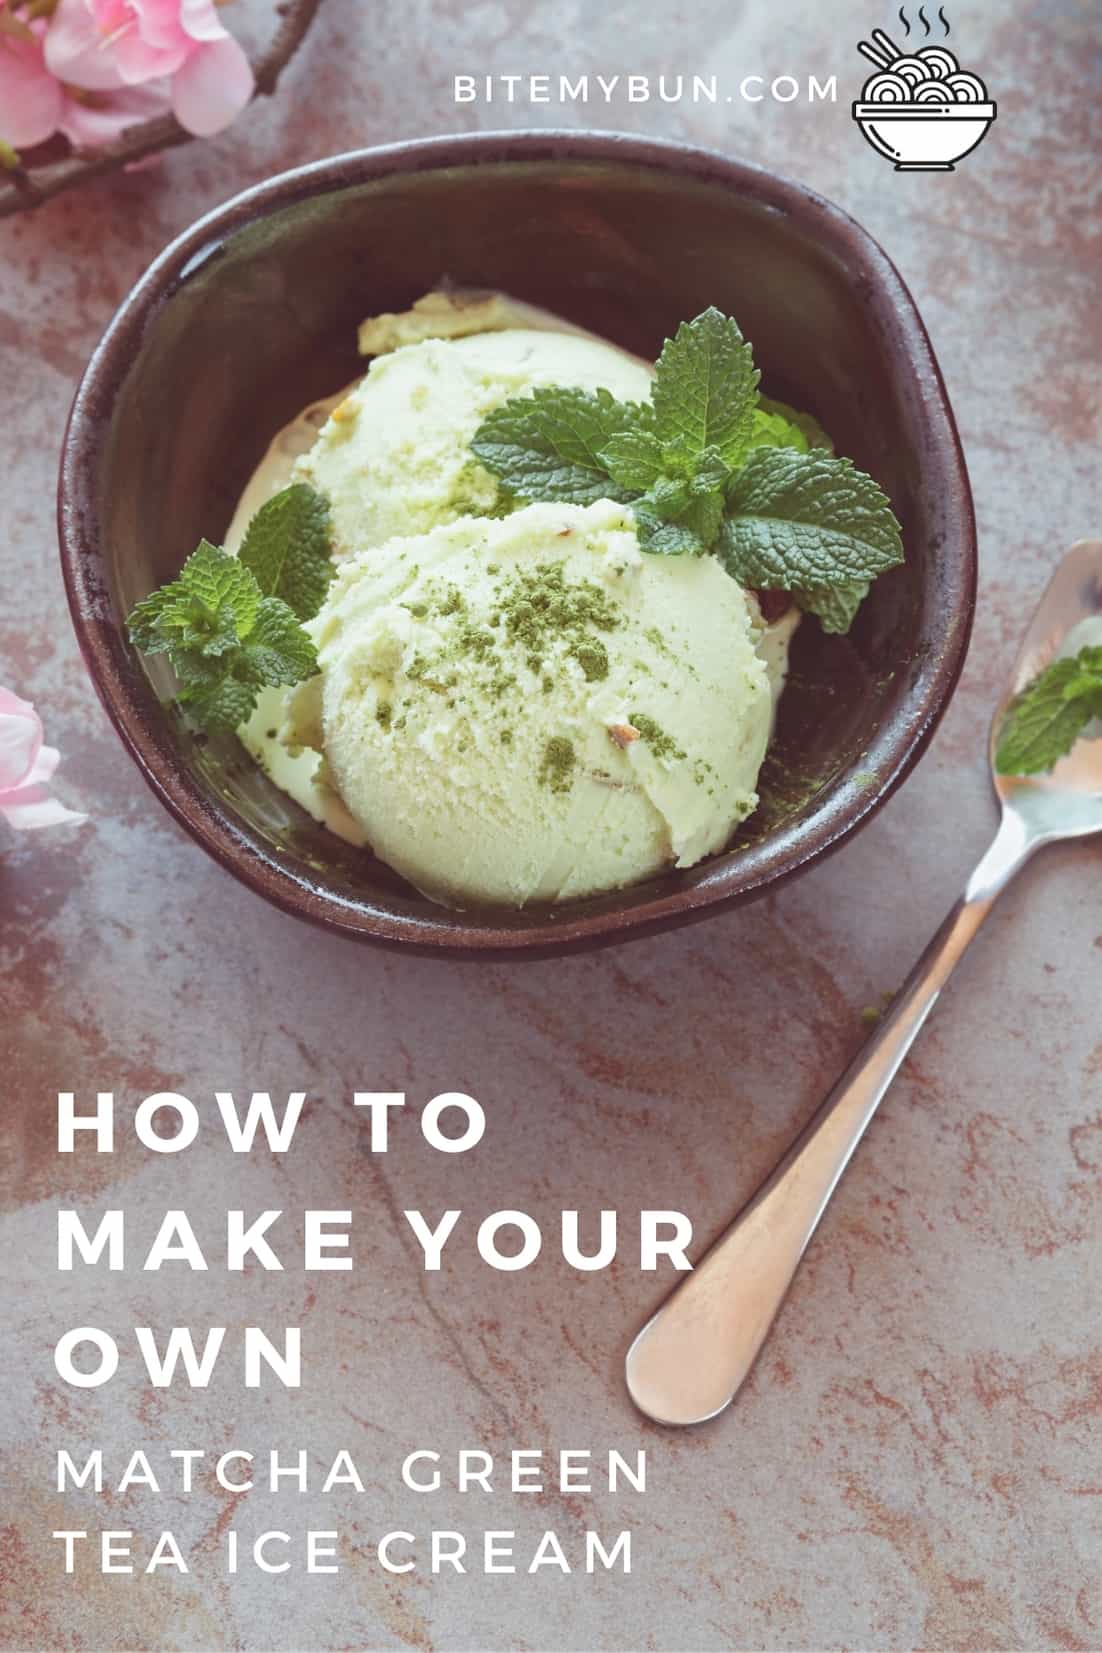 How to make your own matcha green tea ice cream